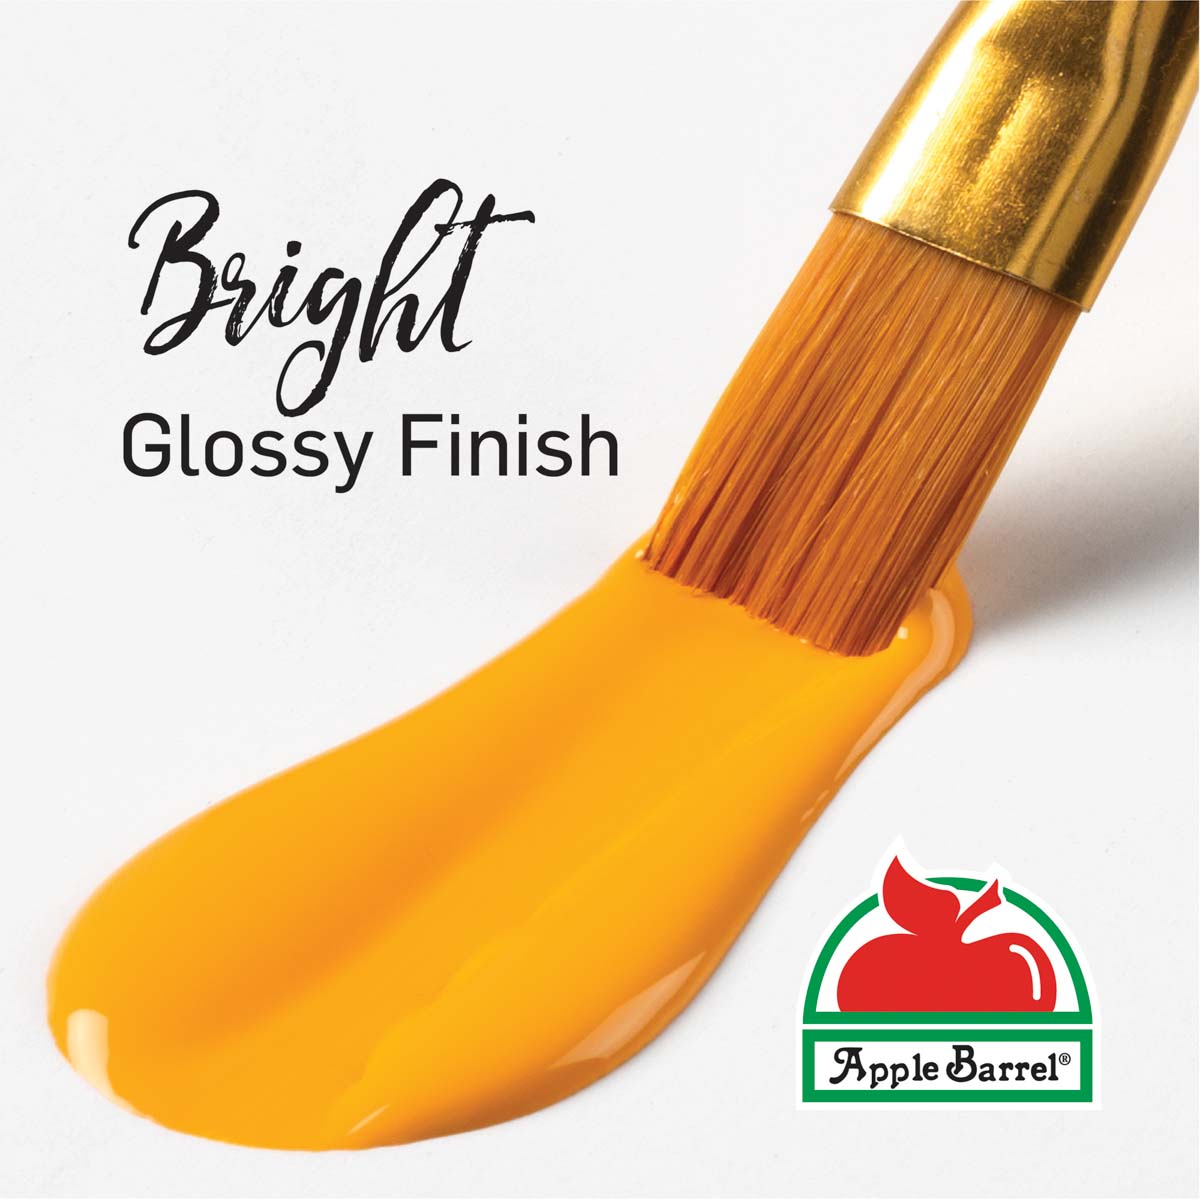 Apple Barrel ® Gloss™ 16 Color Set - PROMOABG